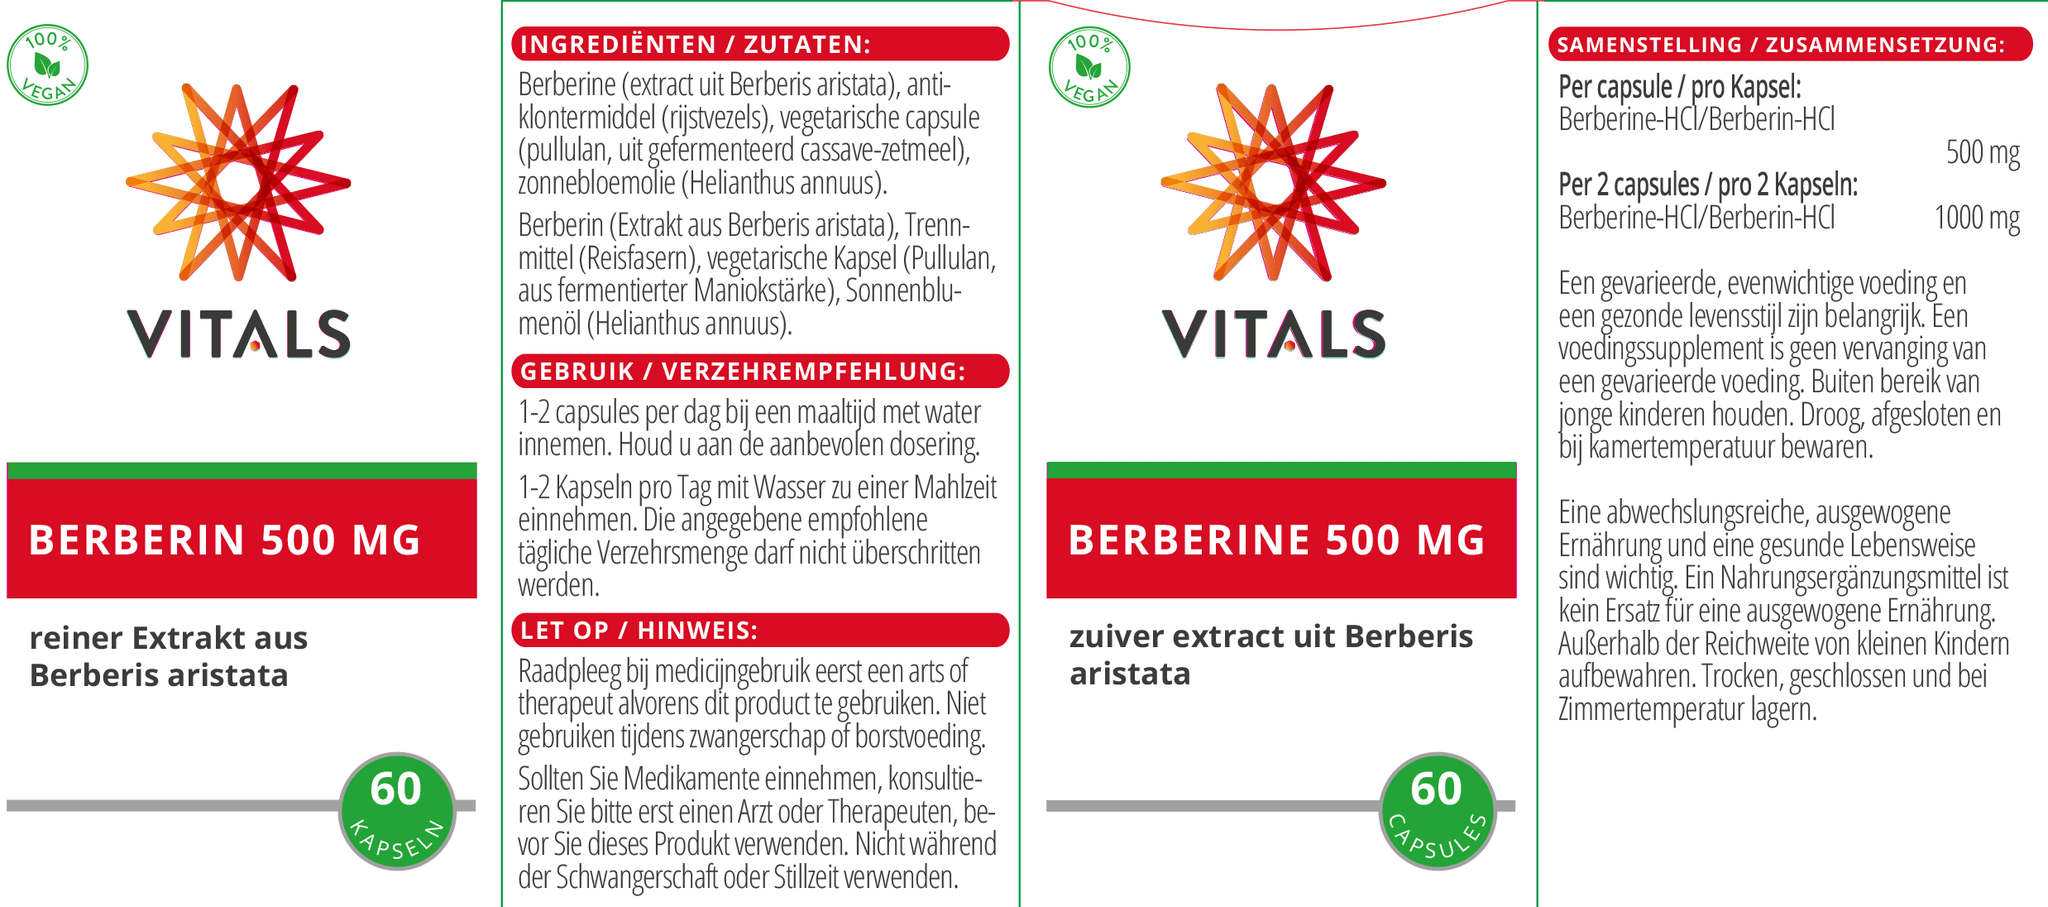 Berberine 500 mg - NowVitamins - Vitals - 8716717003839